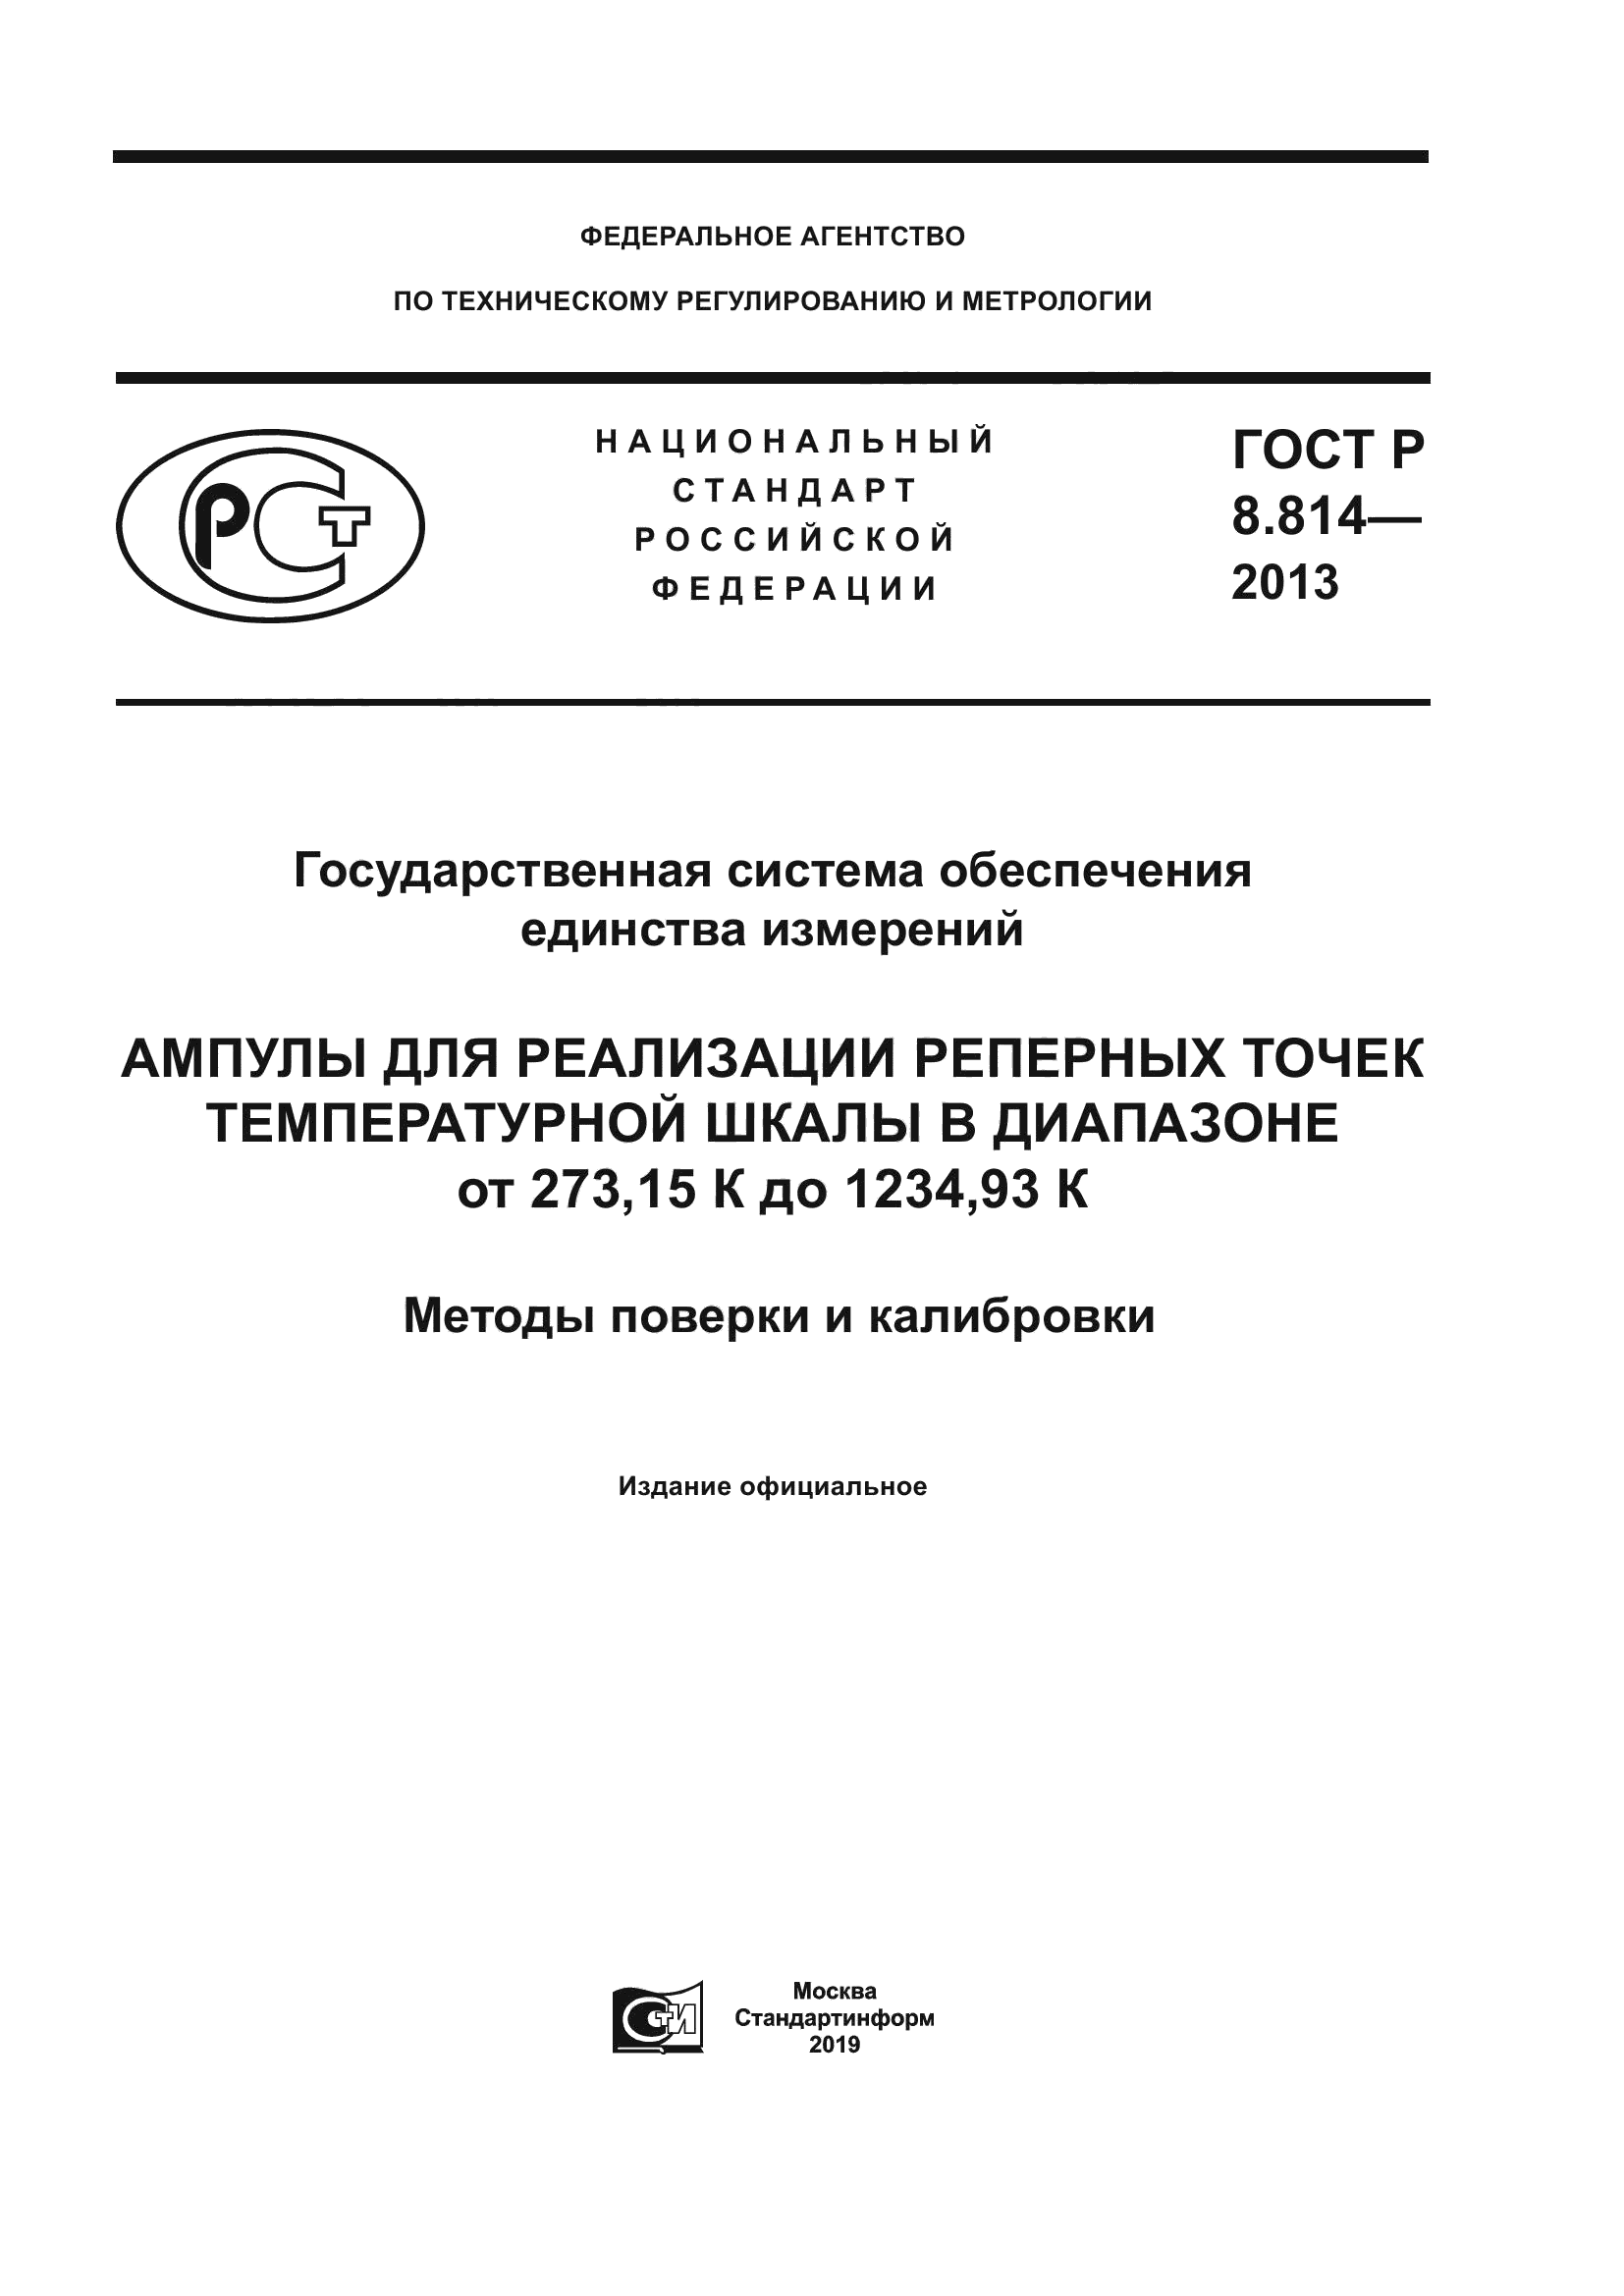 ГОСТ Р 8.814-2013